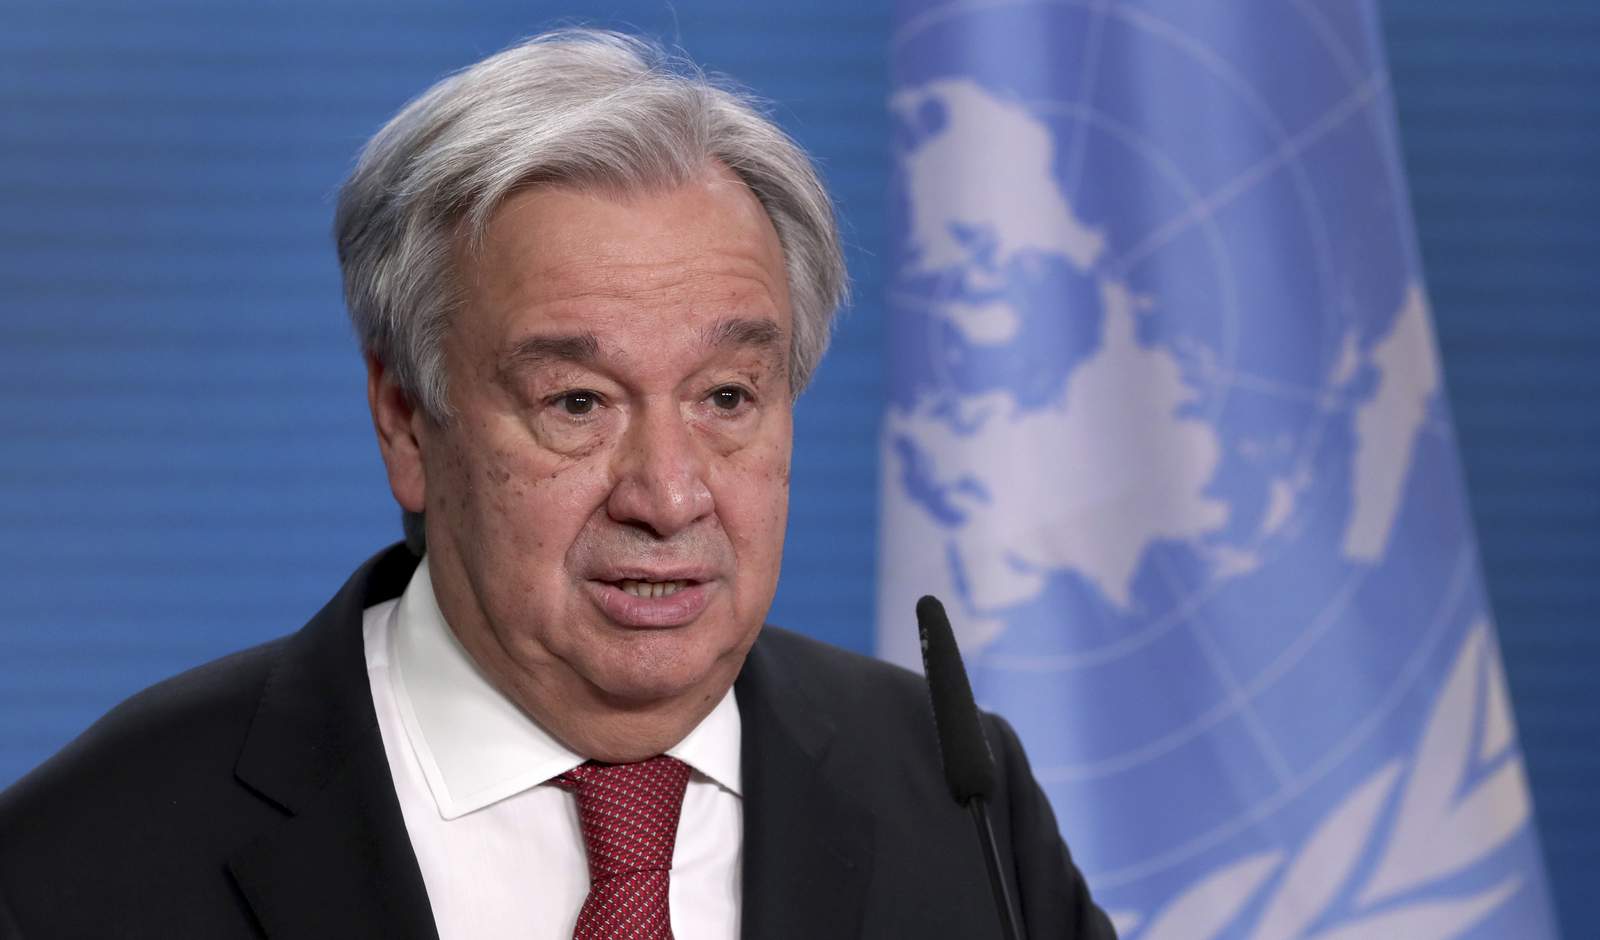 UN chief Antonio Guterres declares he will seek second term